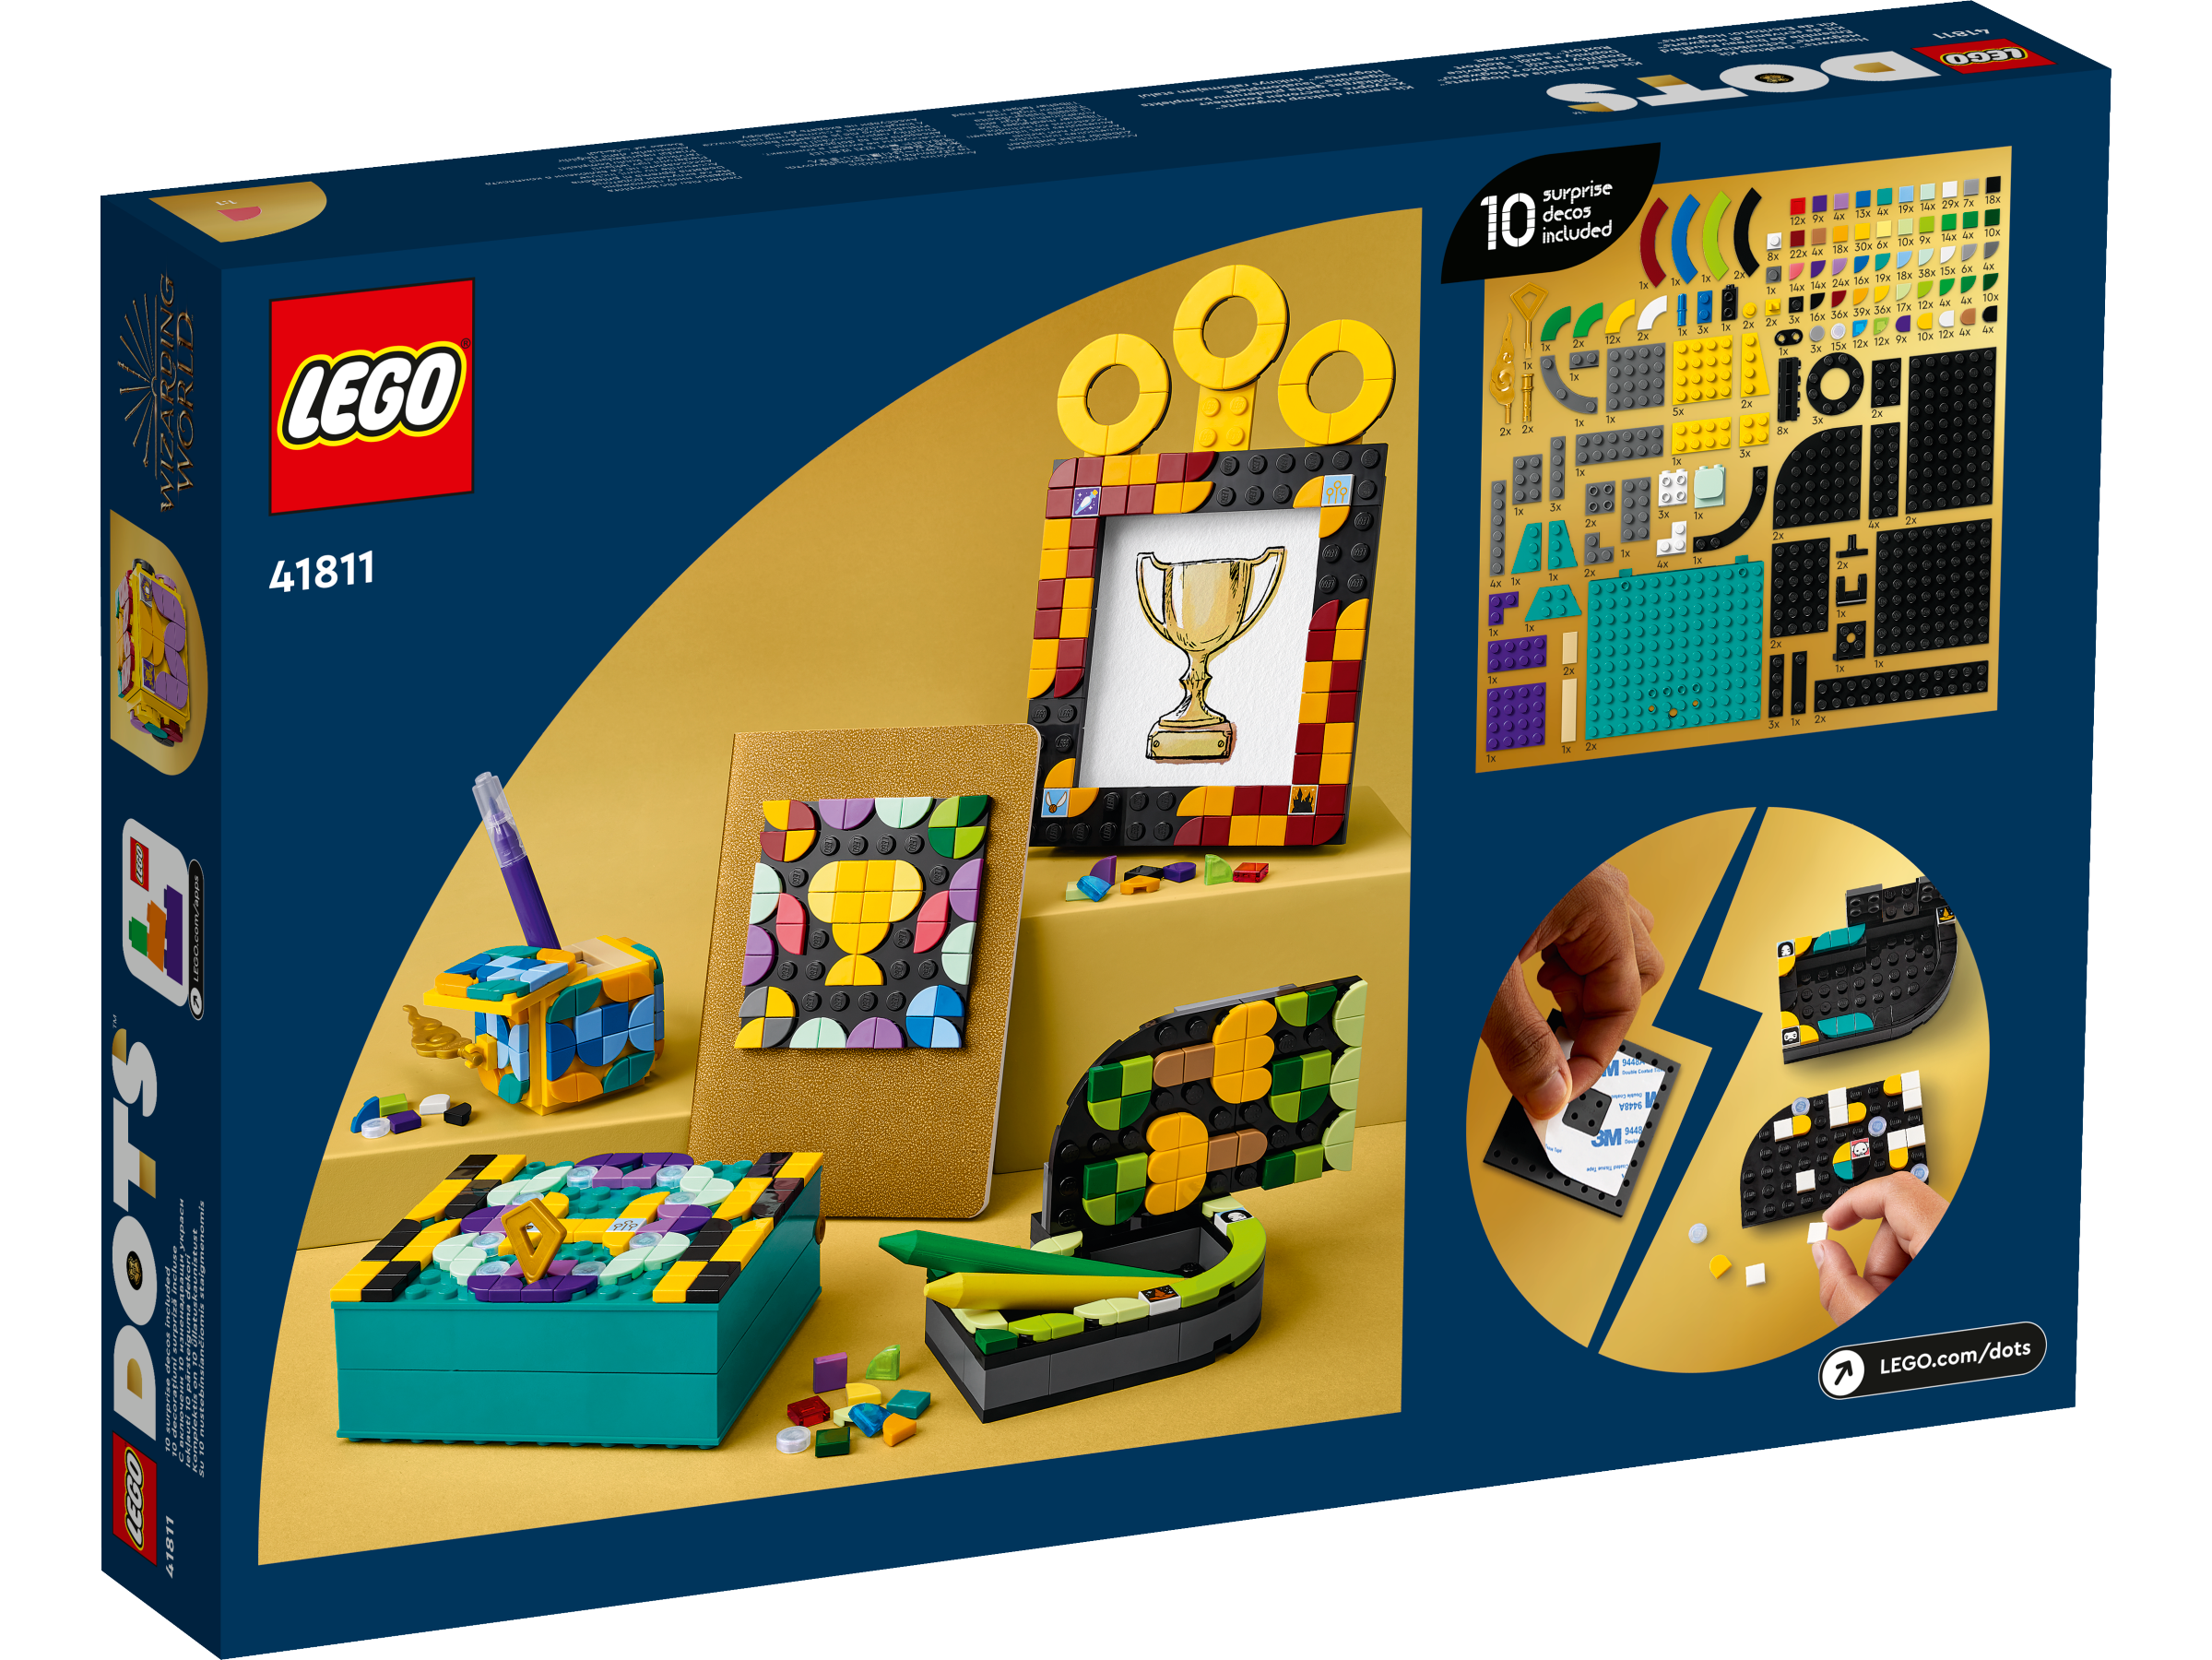 Lego 41811 Hogwarts Desktop Kit